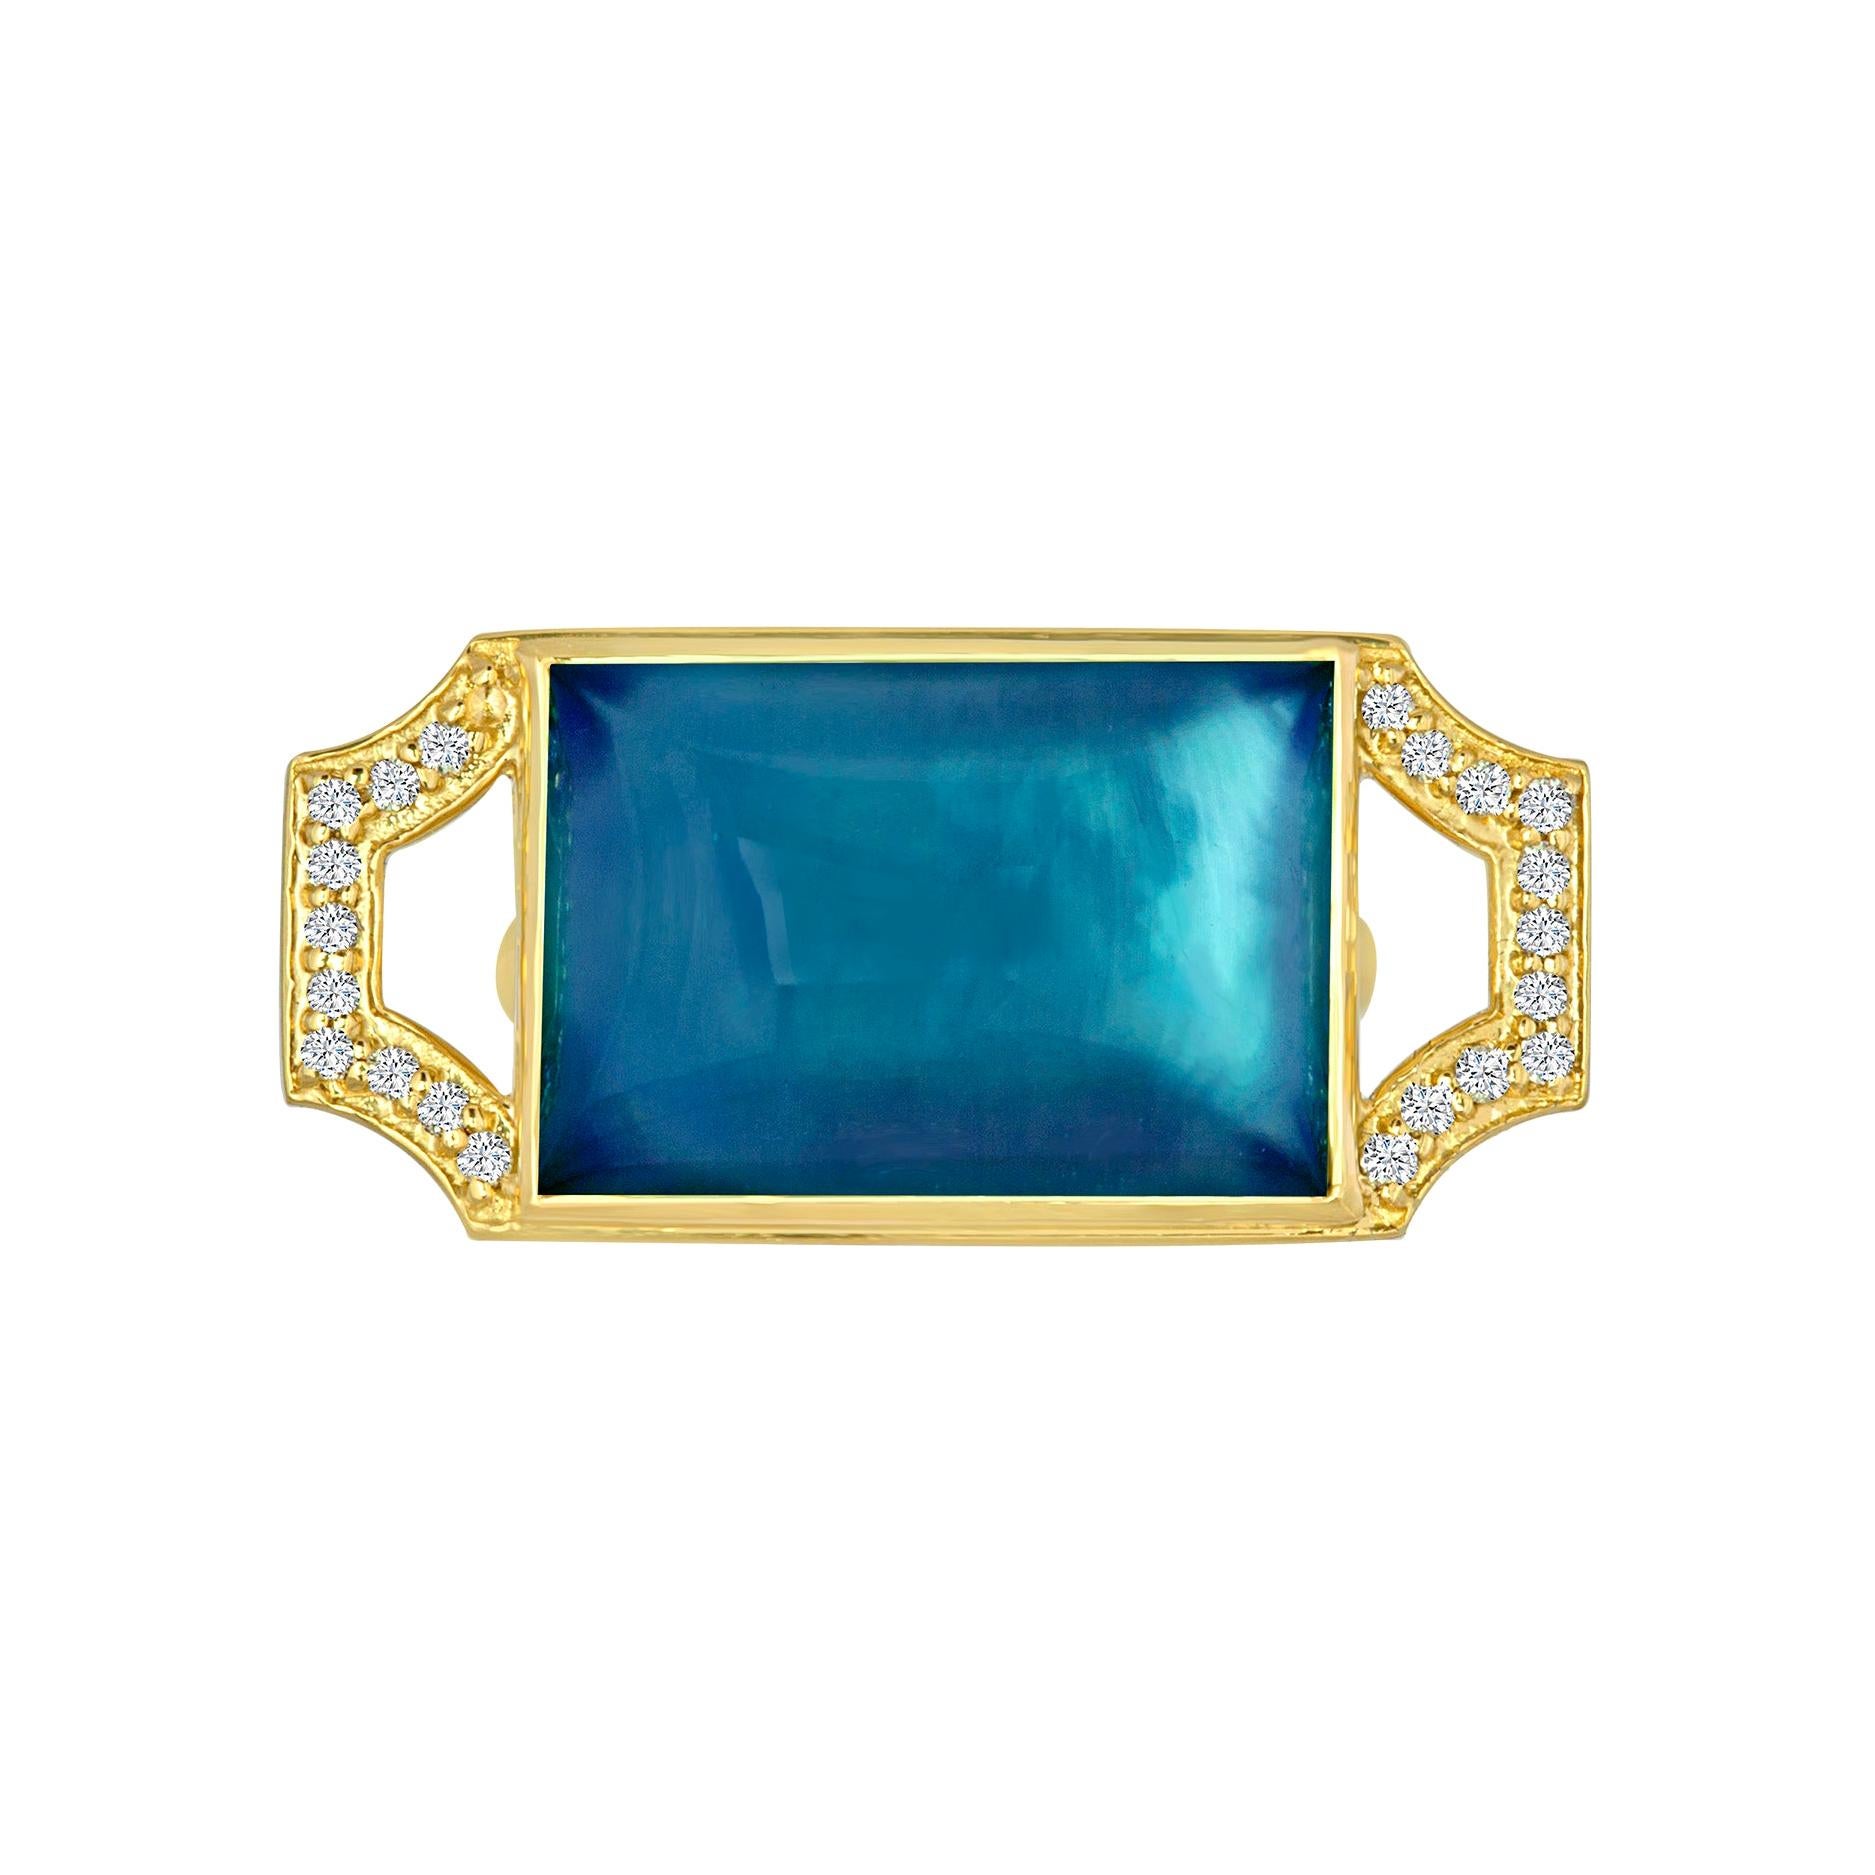 18 Karat Gold Statement Ring with Labradorite and Diamonds